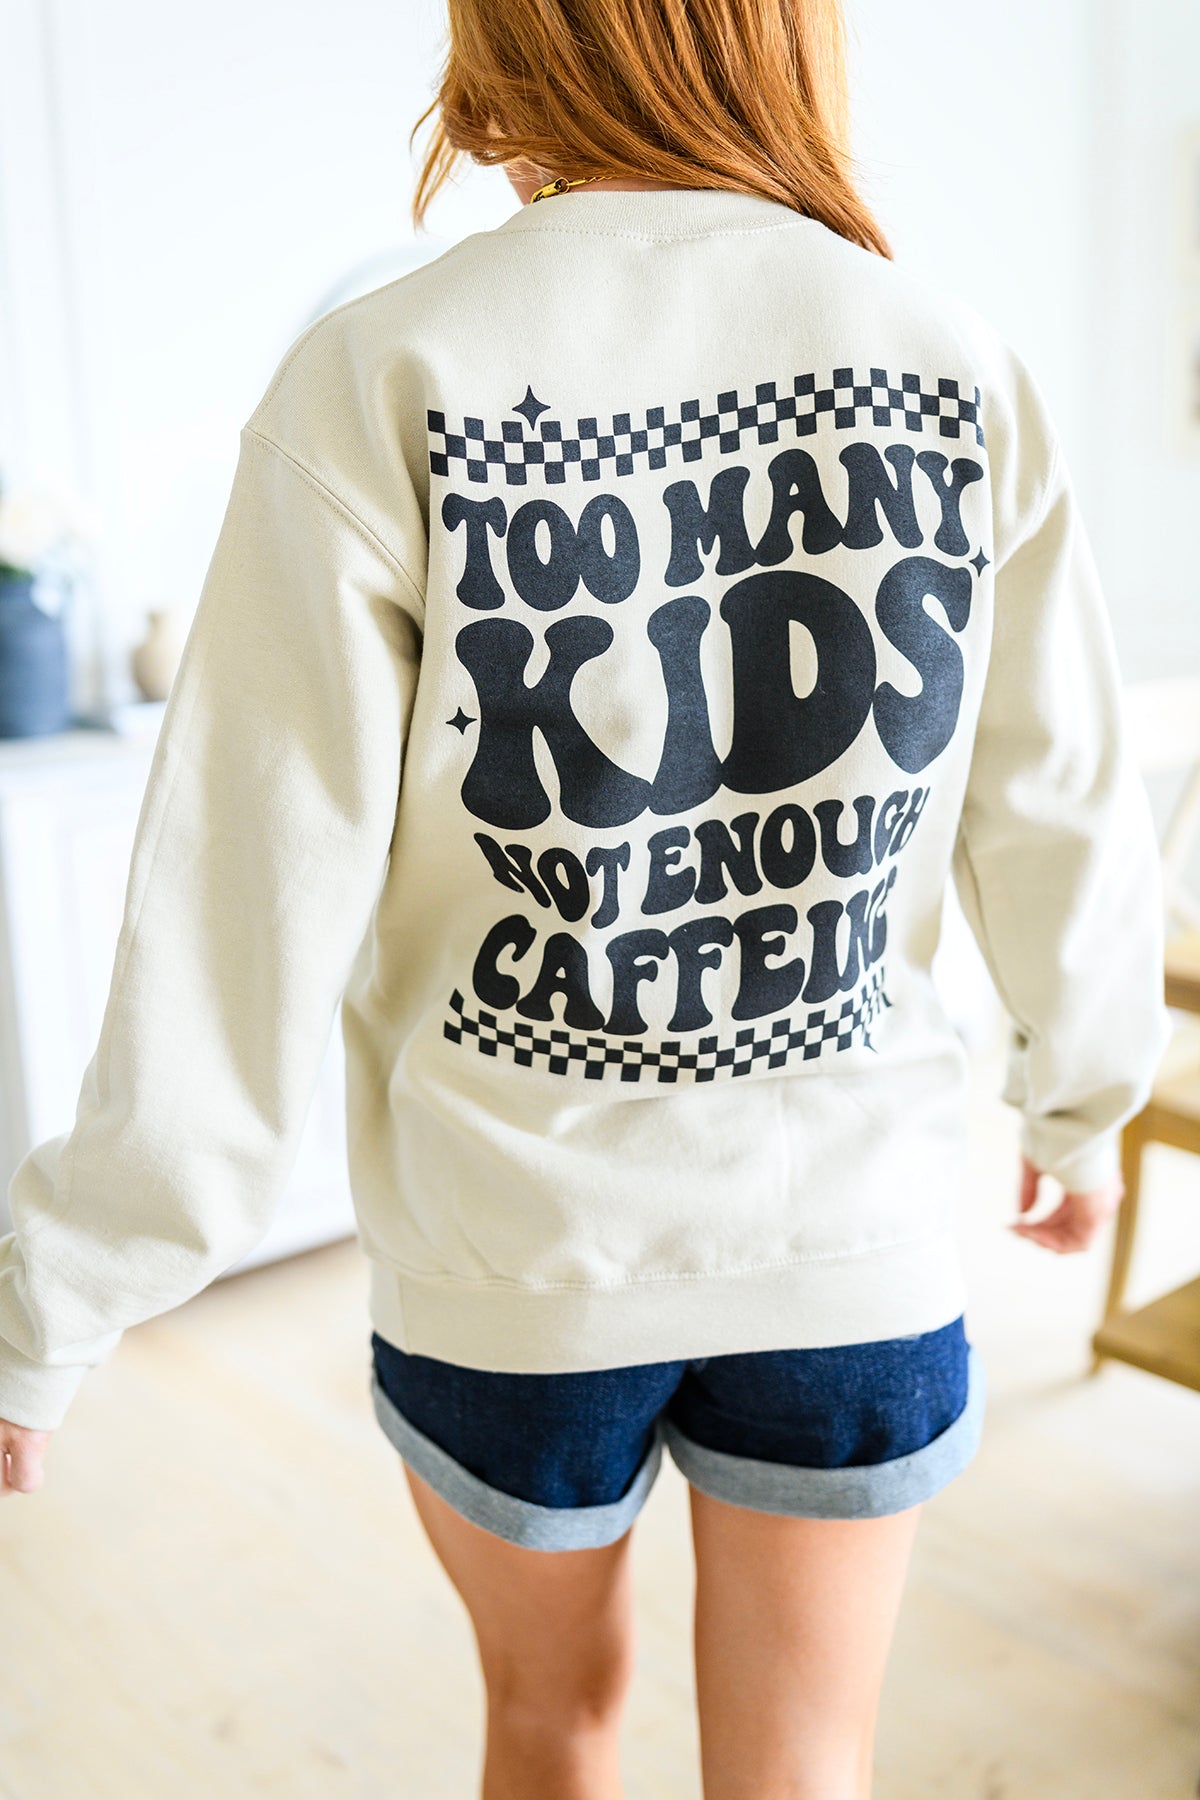 Too Many Kids, Not Enough Caffeine Sweatshirt - 4/13/2023